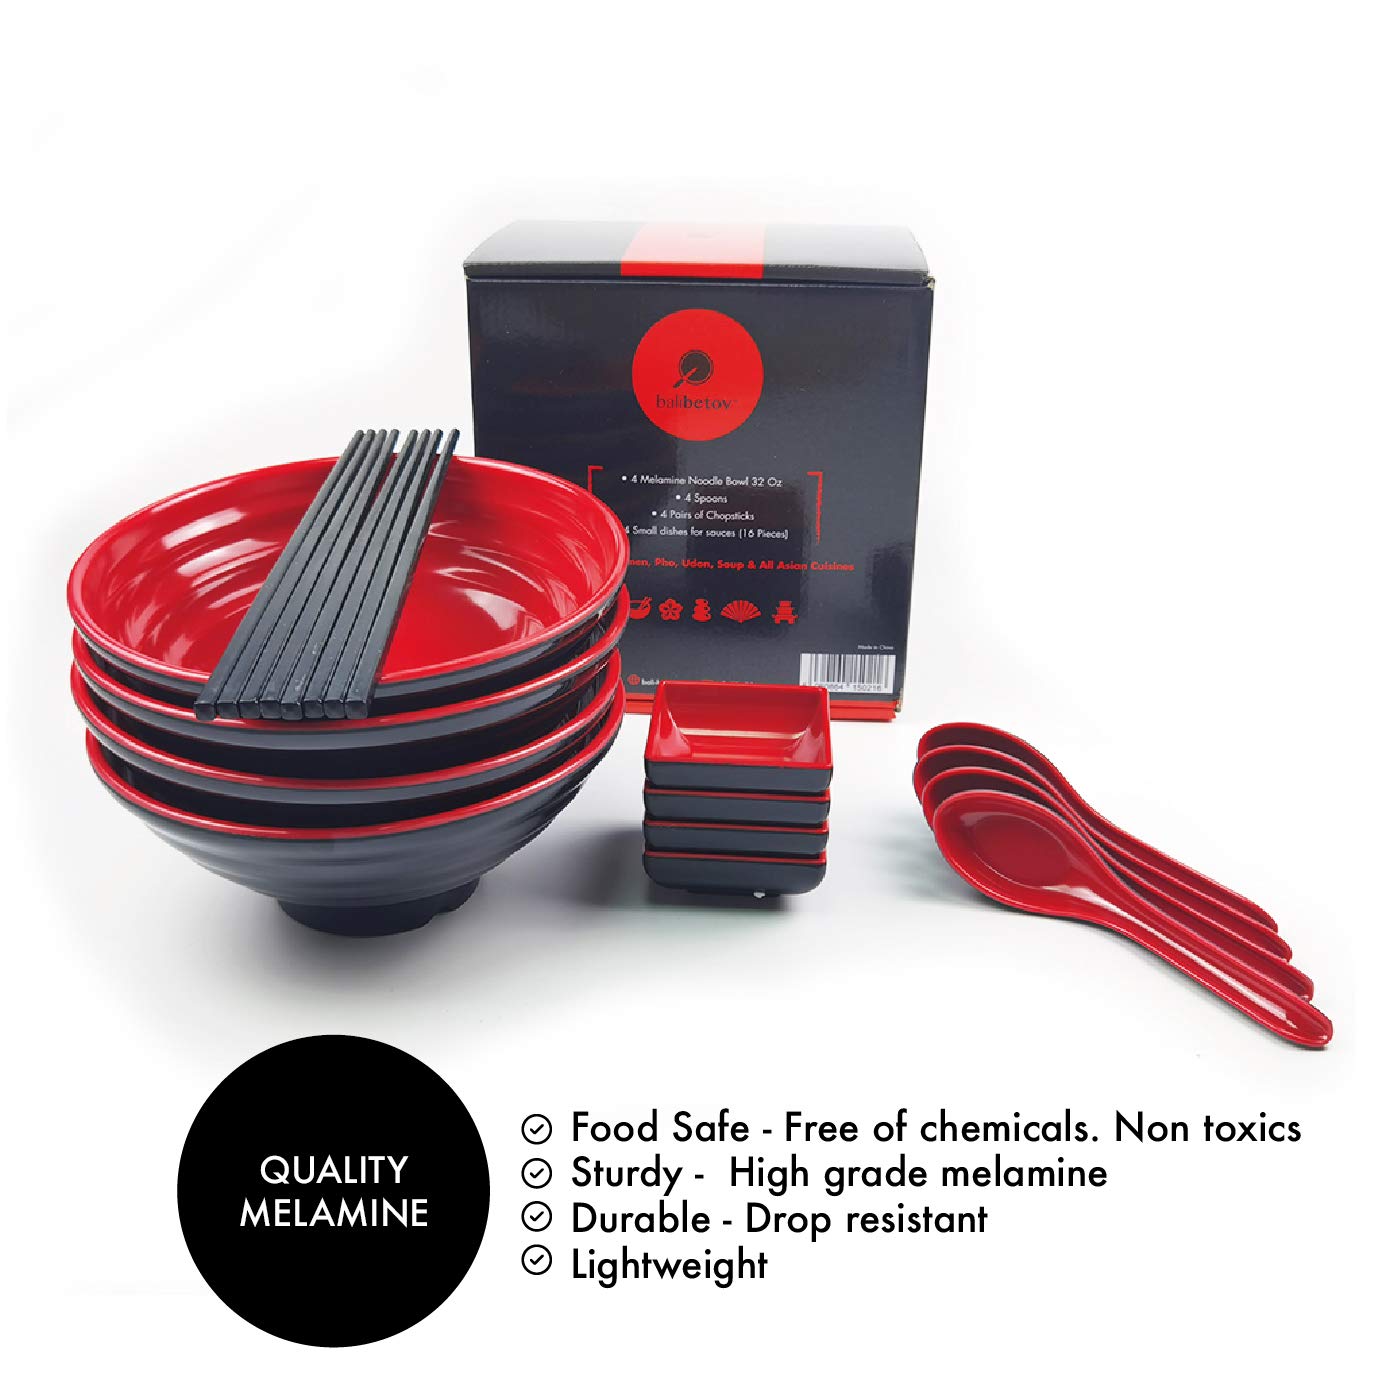 Goliber Ramen Bowl Set - Sushi Set - Set of 4-16pcs Includes Melamine Ramen Bowls, Chopsticks, Spoons and Small Dish for Sauce